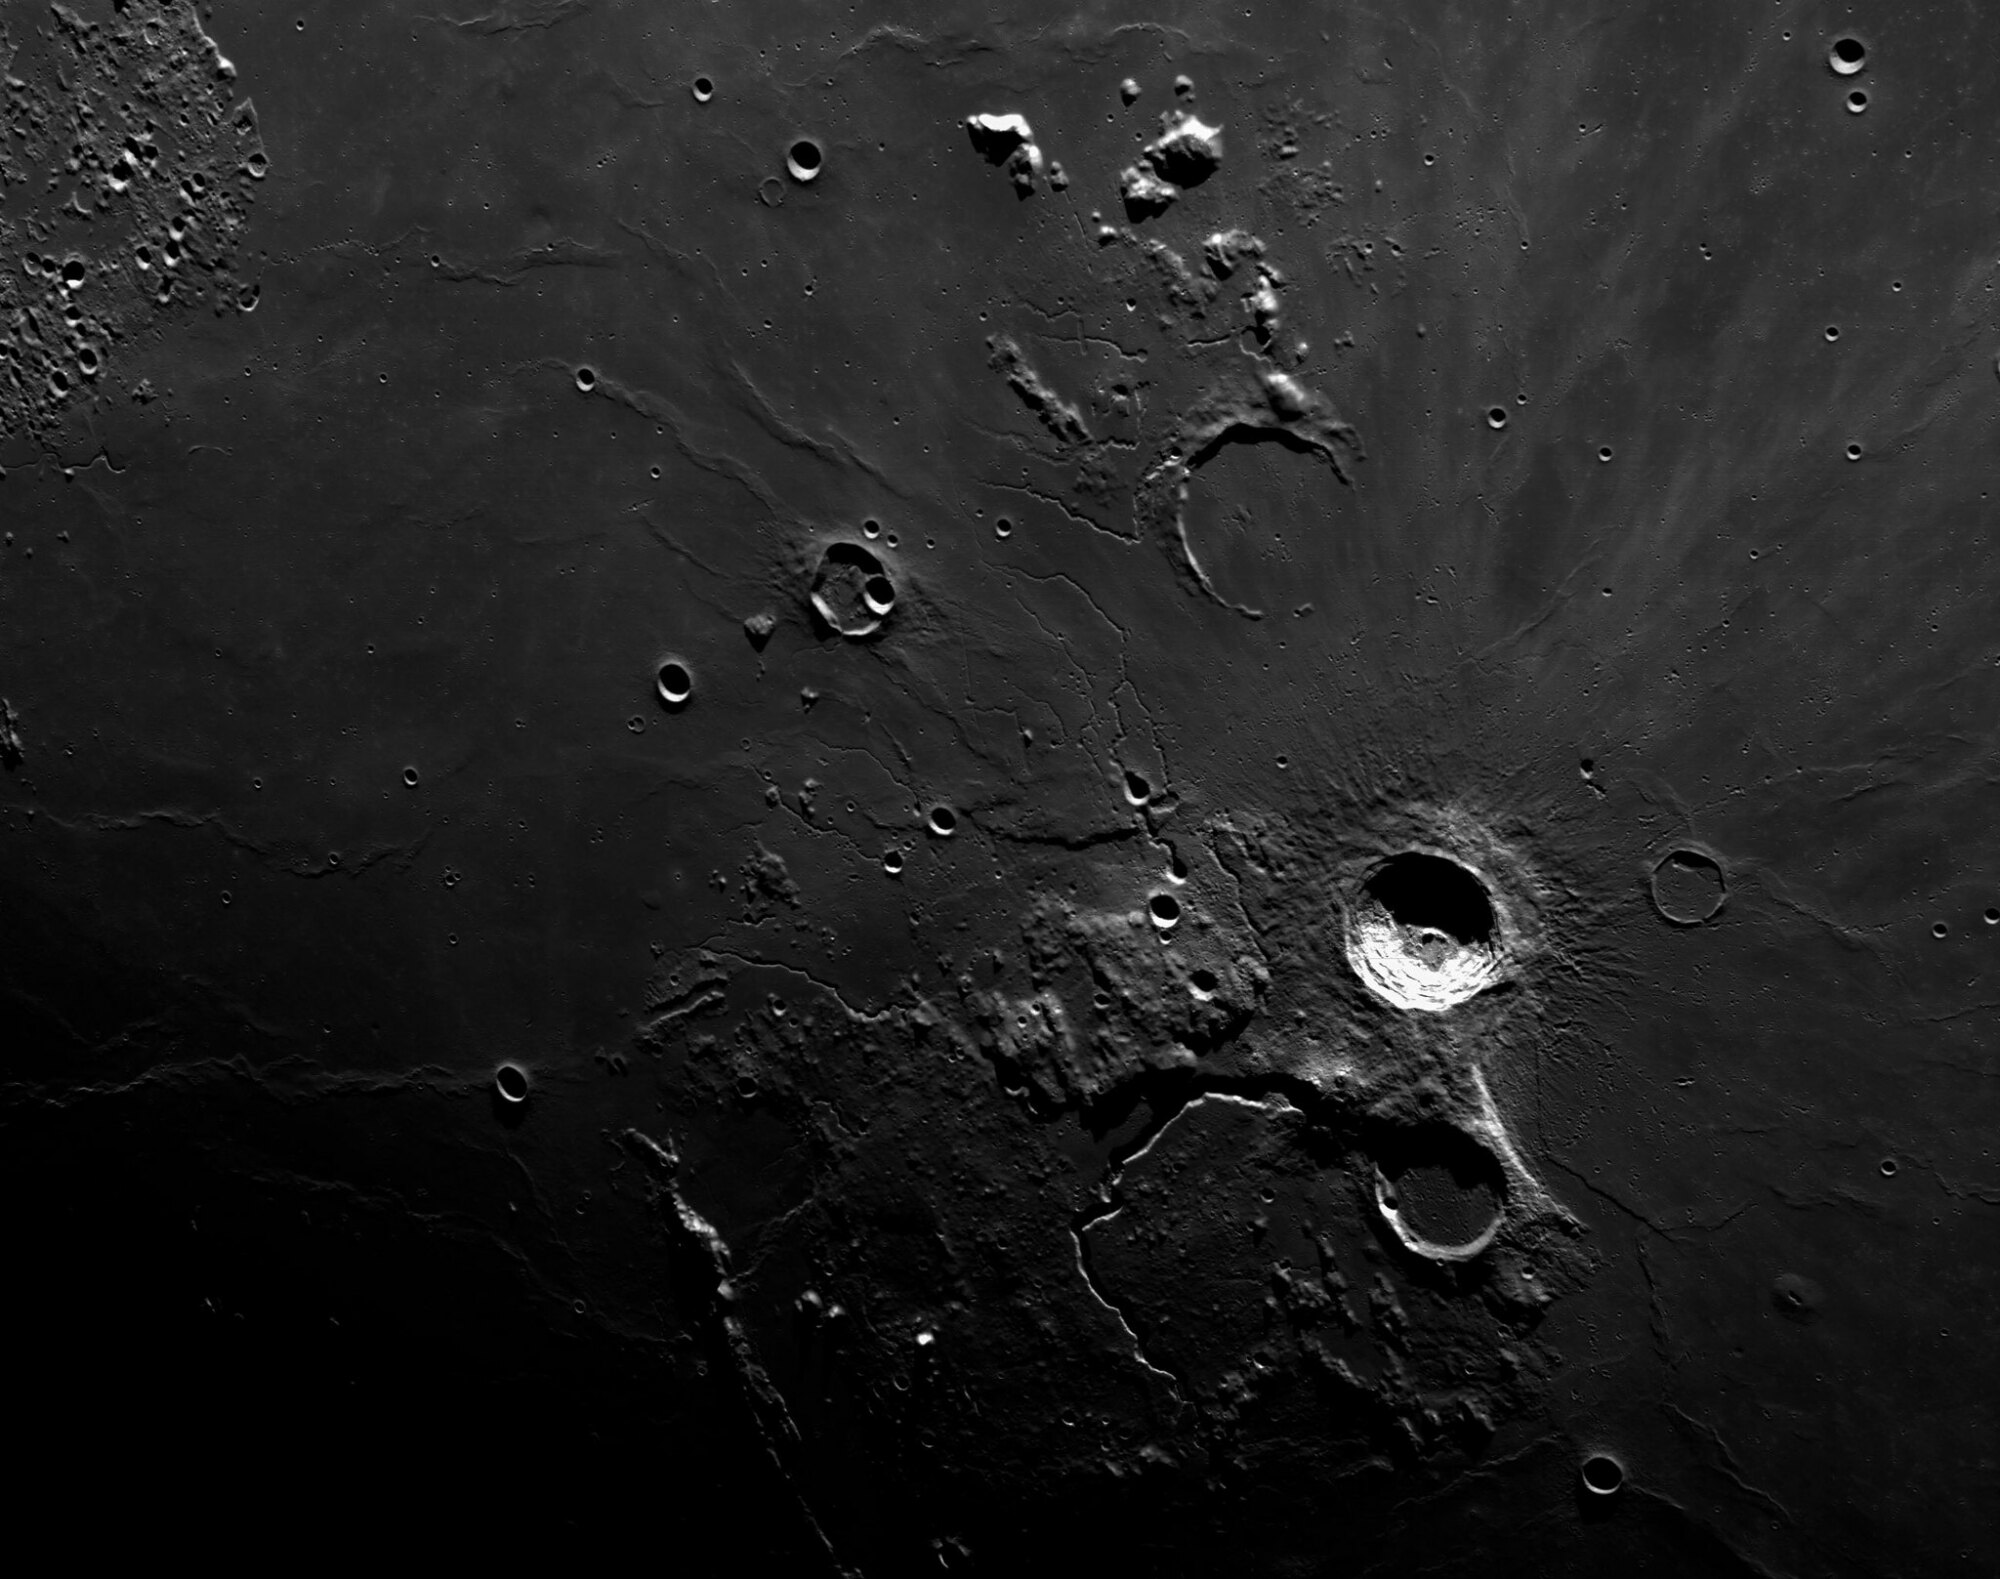 the lunar surface